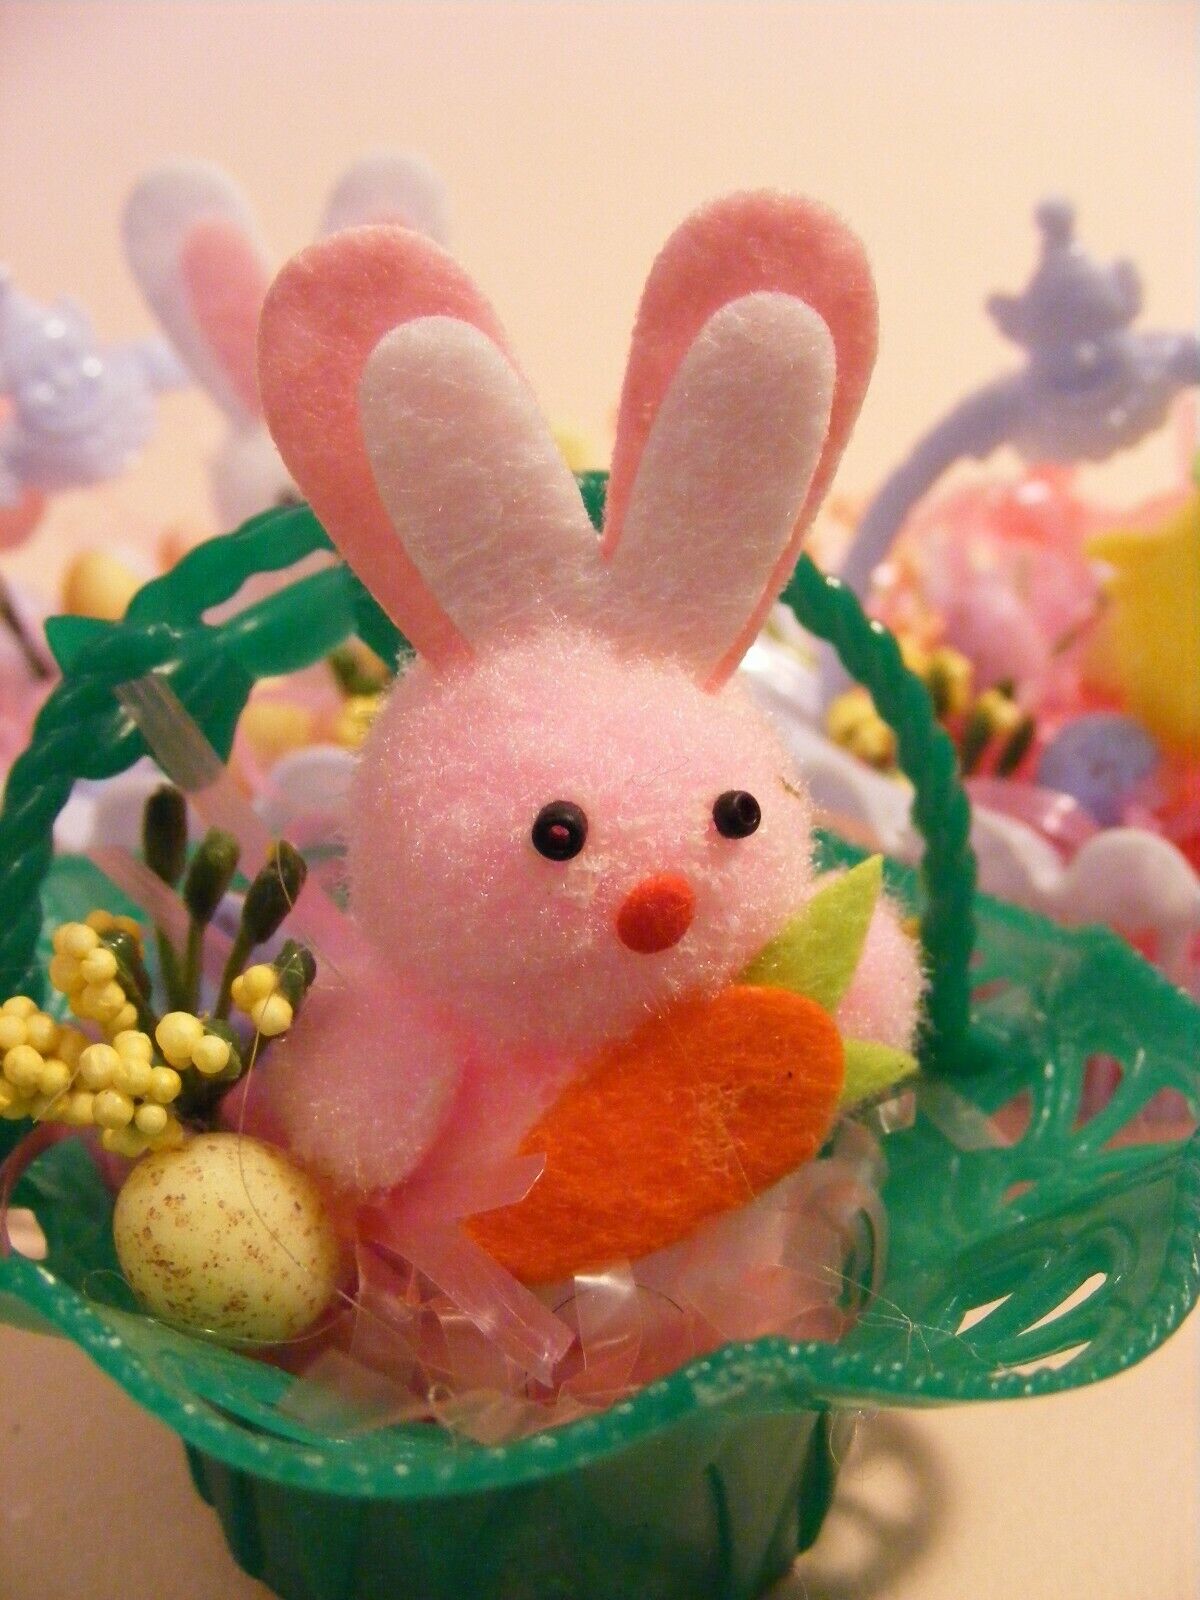 Vintage Easter nutcup arrangements bunnies chicks Без бренда - фотография #4